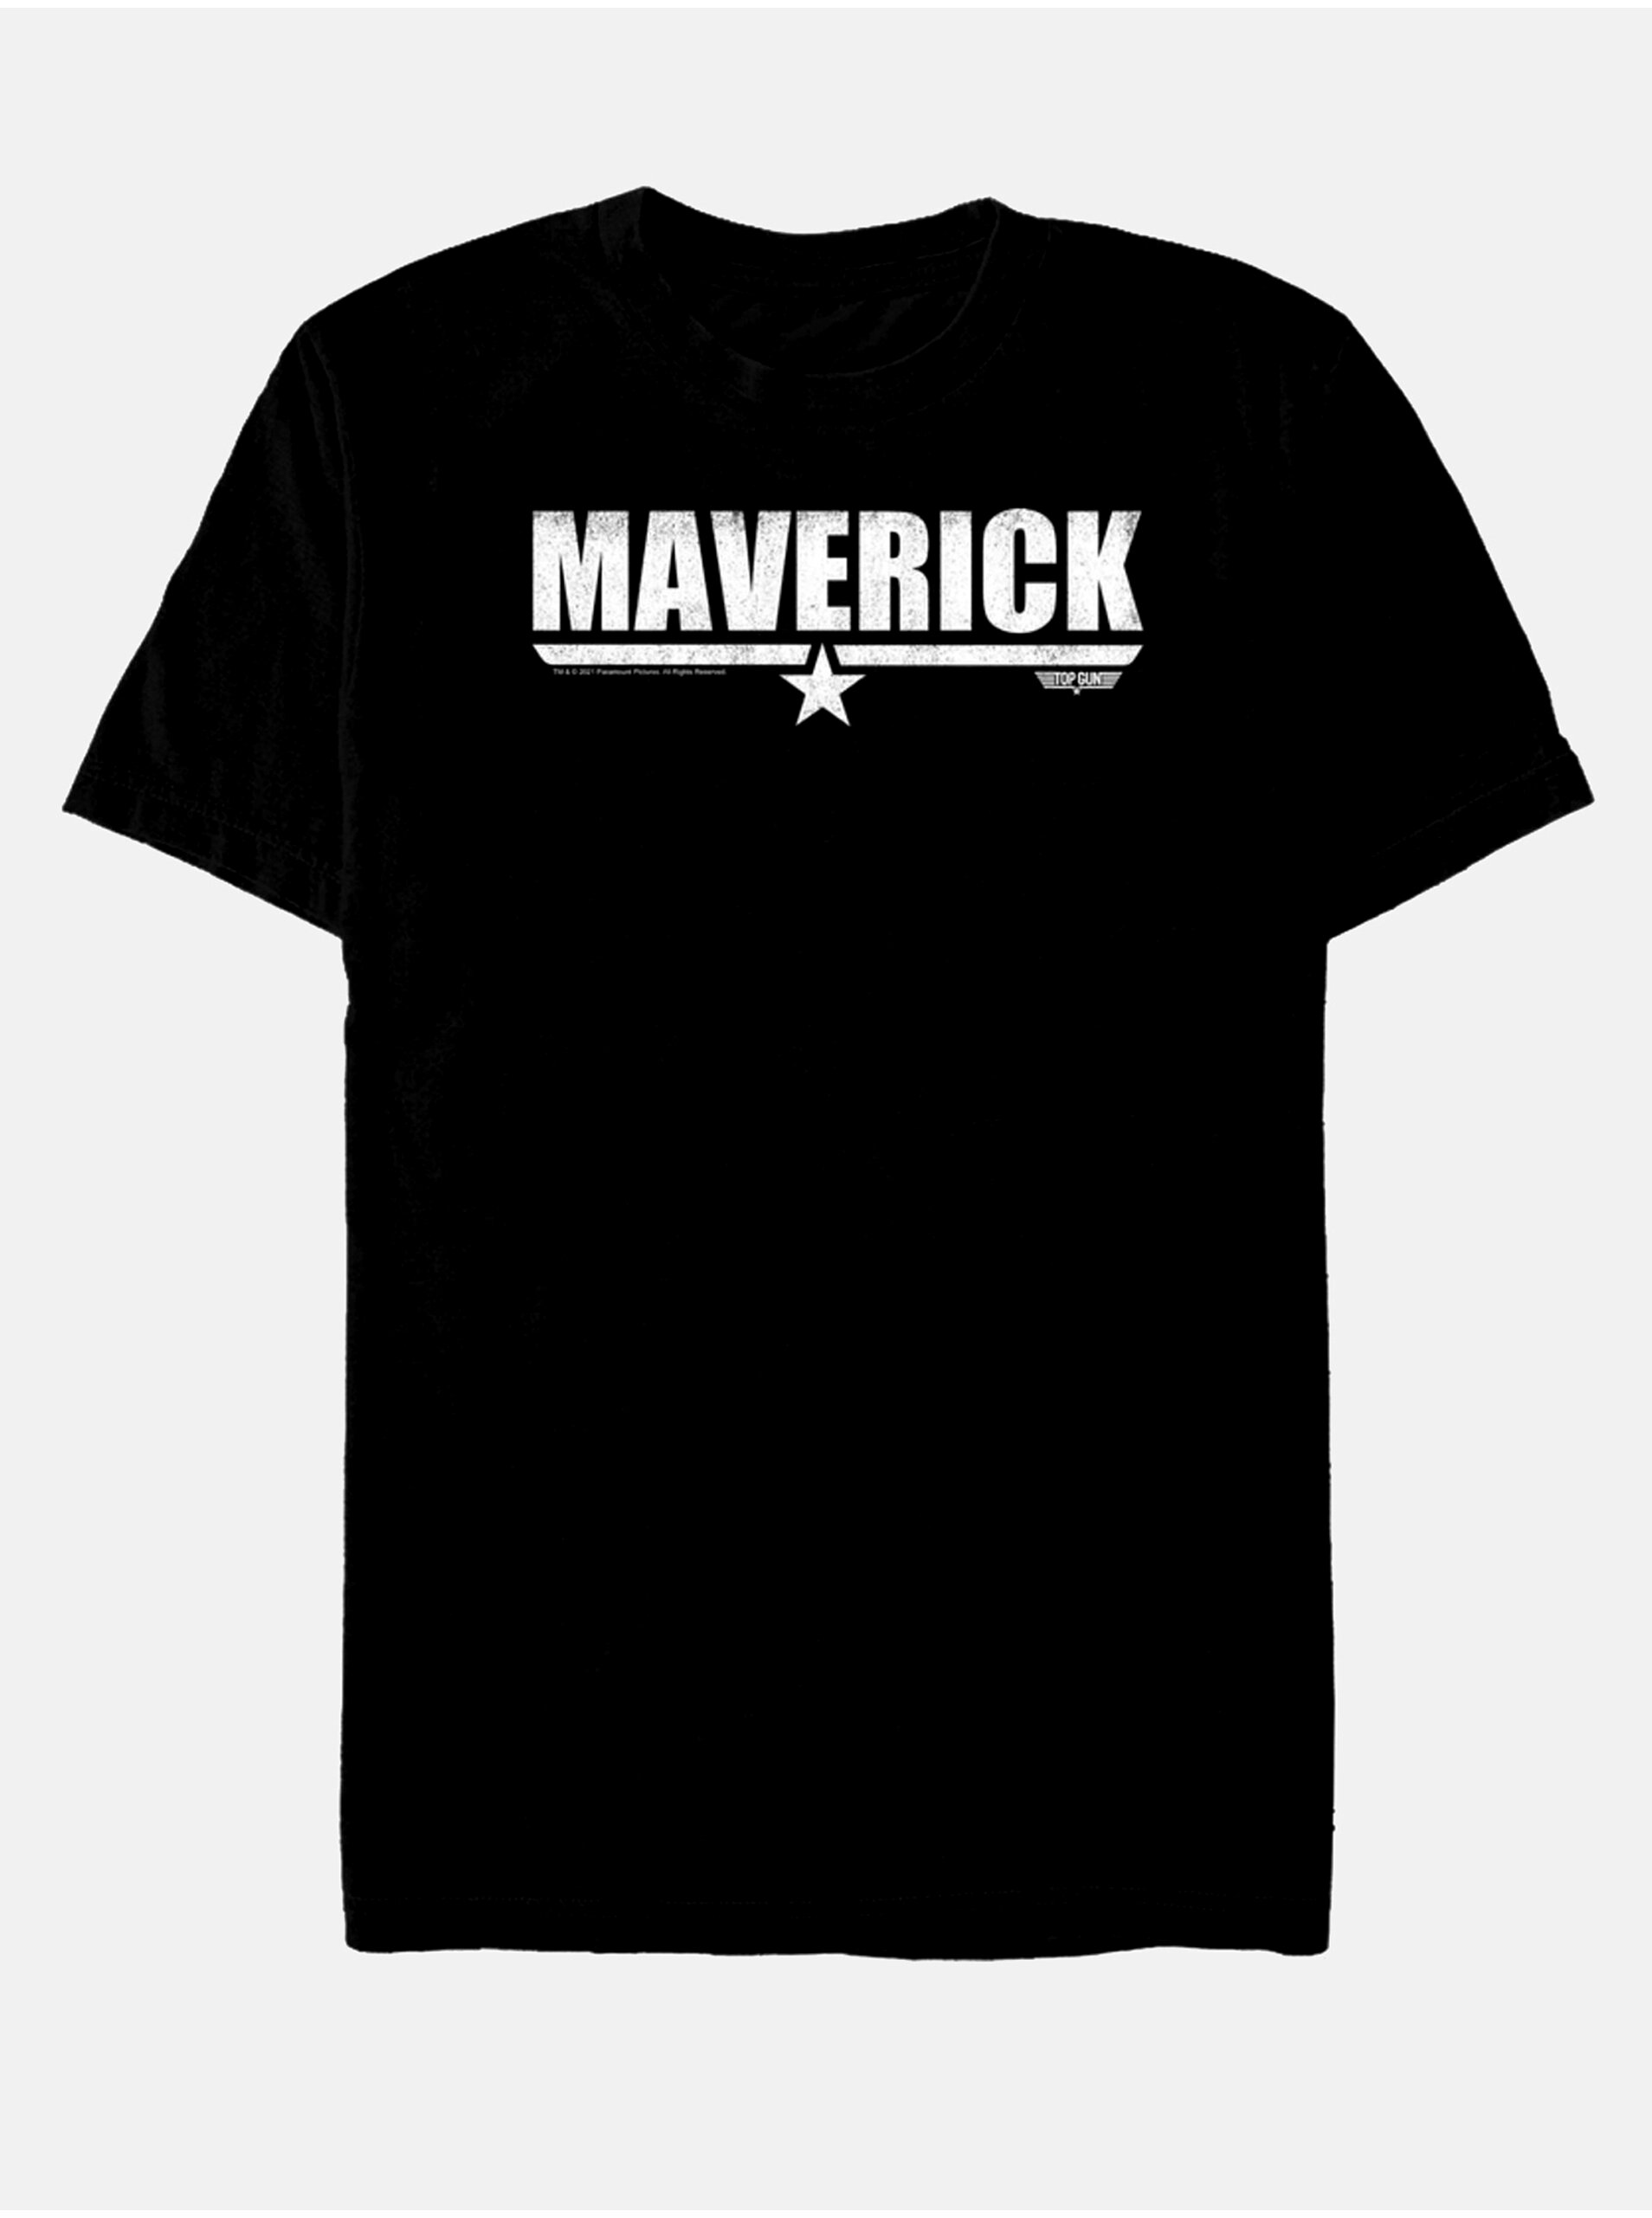 Lacno Čierne unisex tričko Paramount Maverick